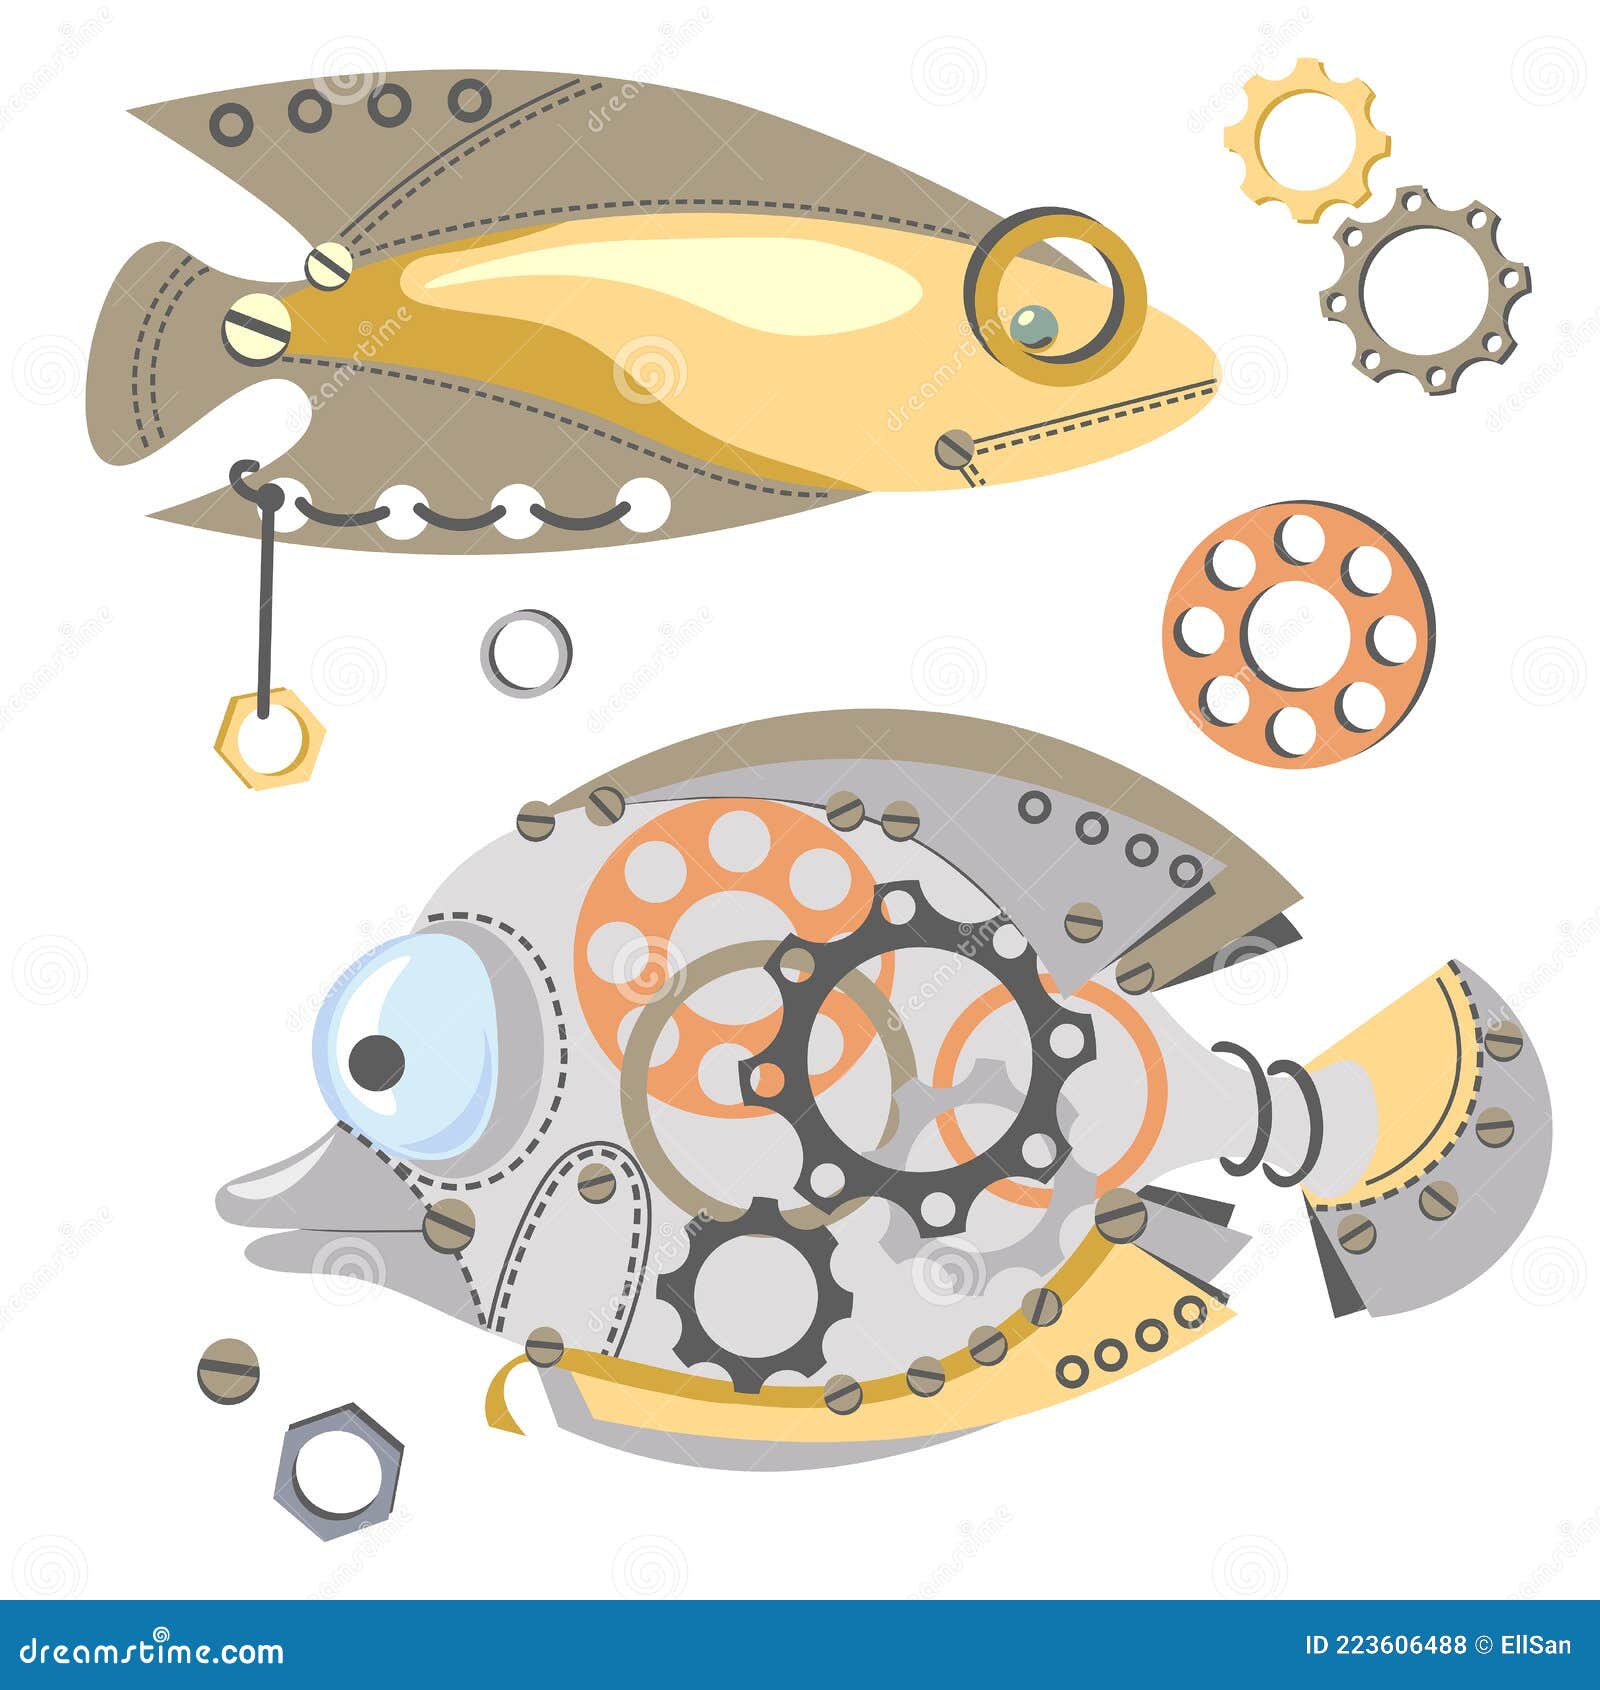 https://thumbs.dreamstime.com/z/fantastic-mechanical-fish-cute-metal-fish-gear-wheels-metal-part-nails-steampunk-style-cartoon-design-fantastic-mechanical-223606488.jpg